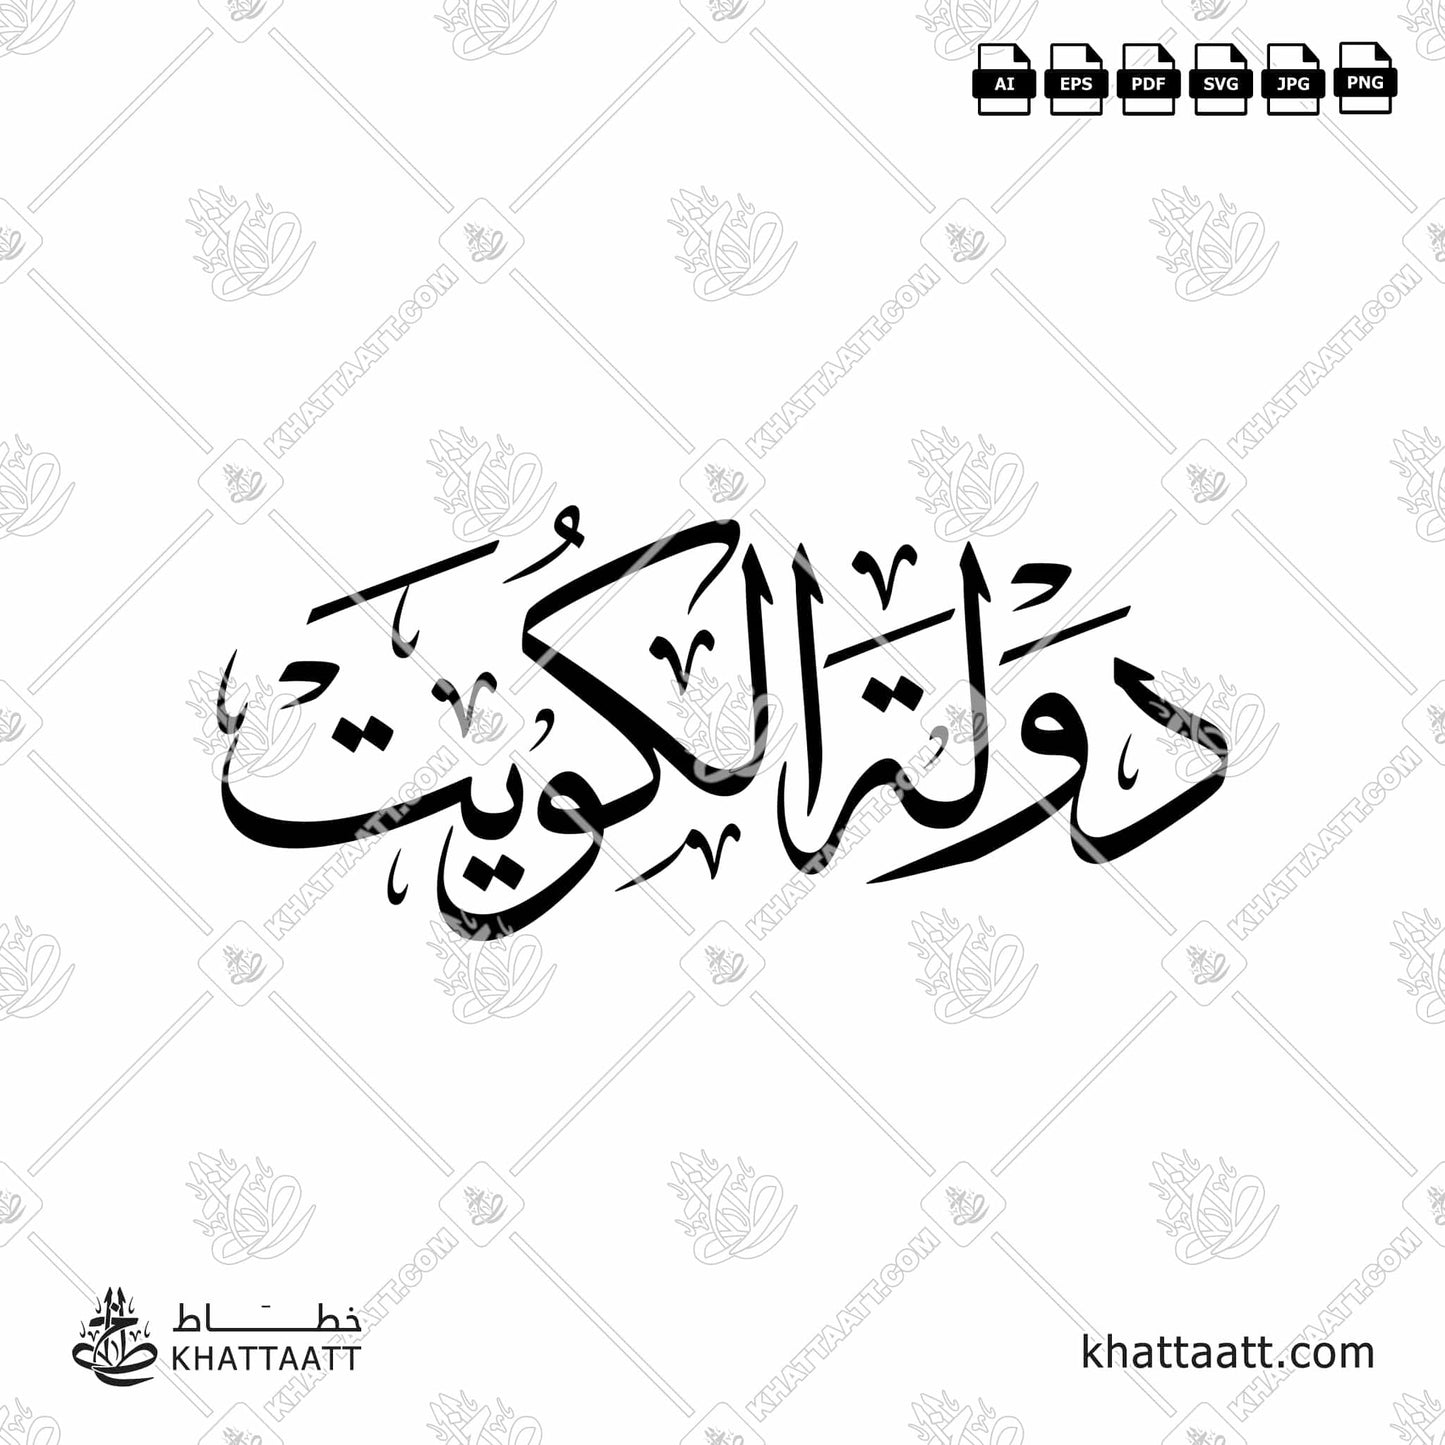 Download Arabic calligraphy تحميل مخطوطة خط عربي of State of Kuwait - دولة الكويت (T011) Thuluth - خط الثلث in vector فيكتور and png